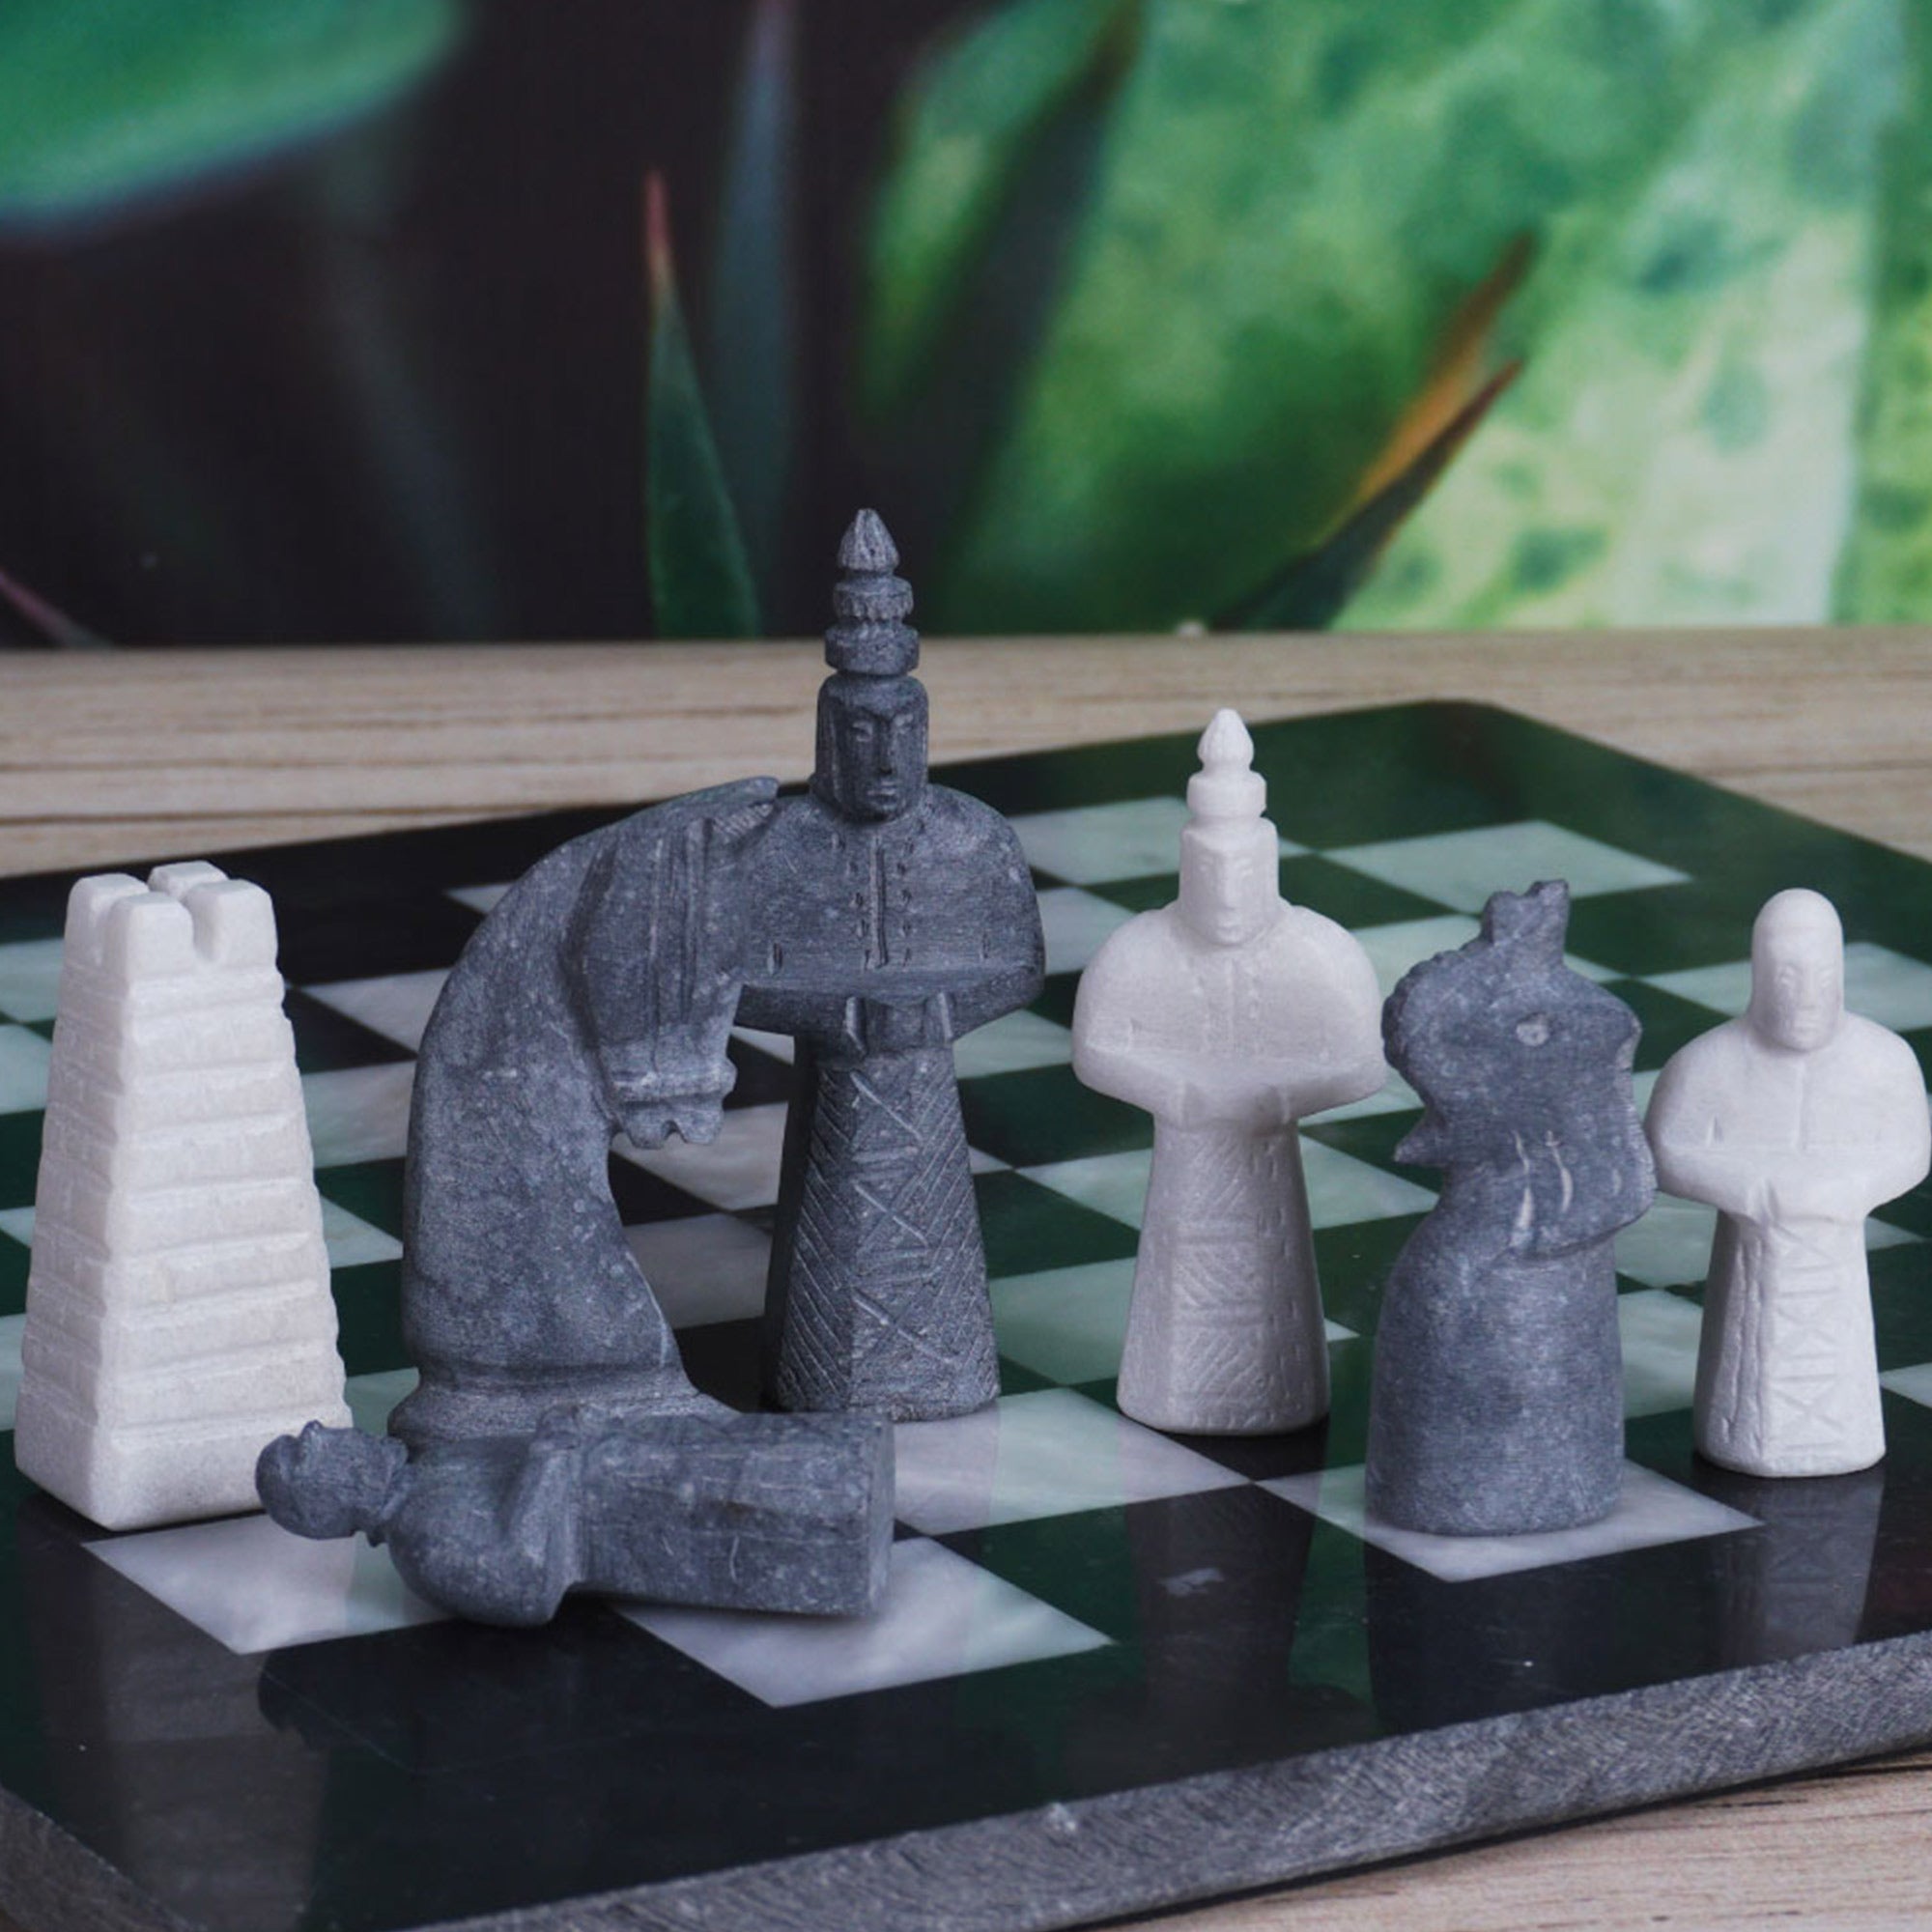 15 Inches Black & White Onyx Chess Set - Marble Island